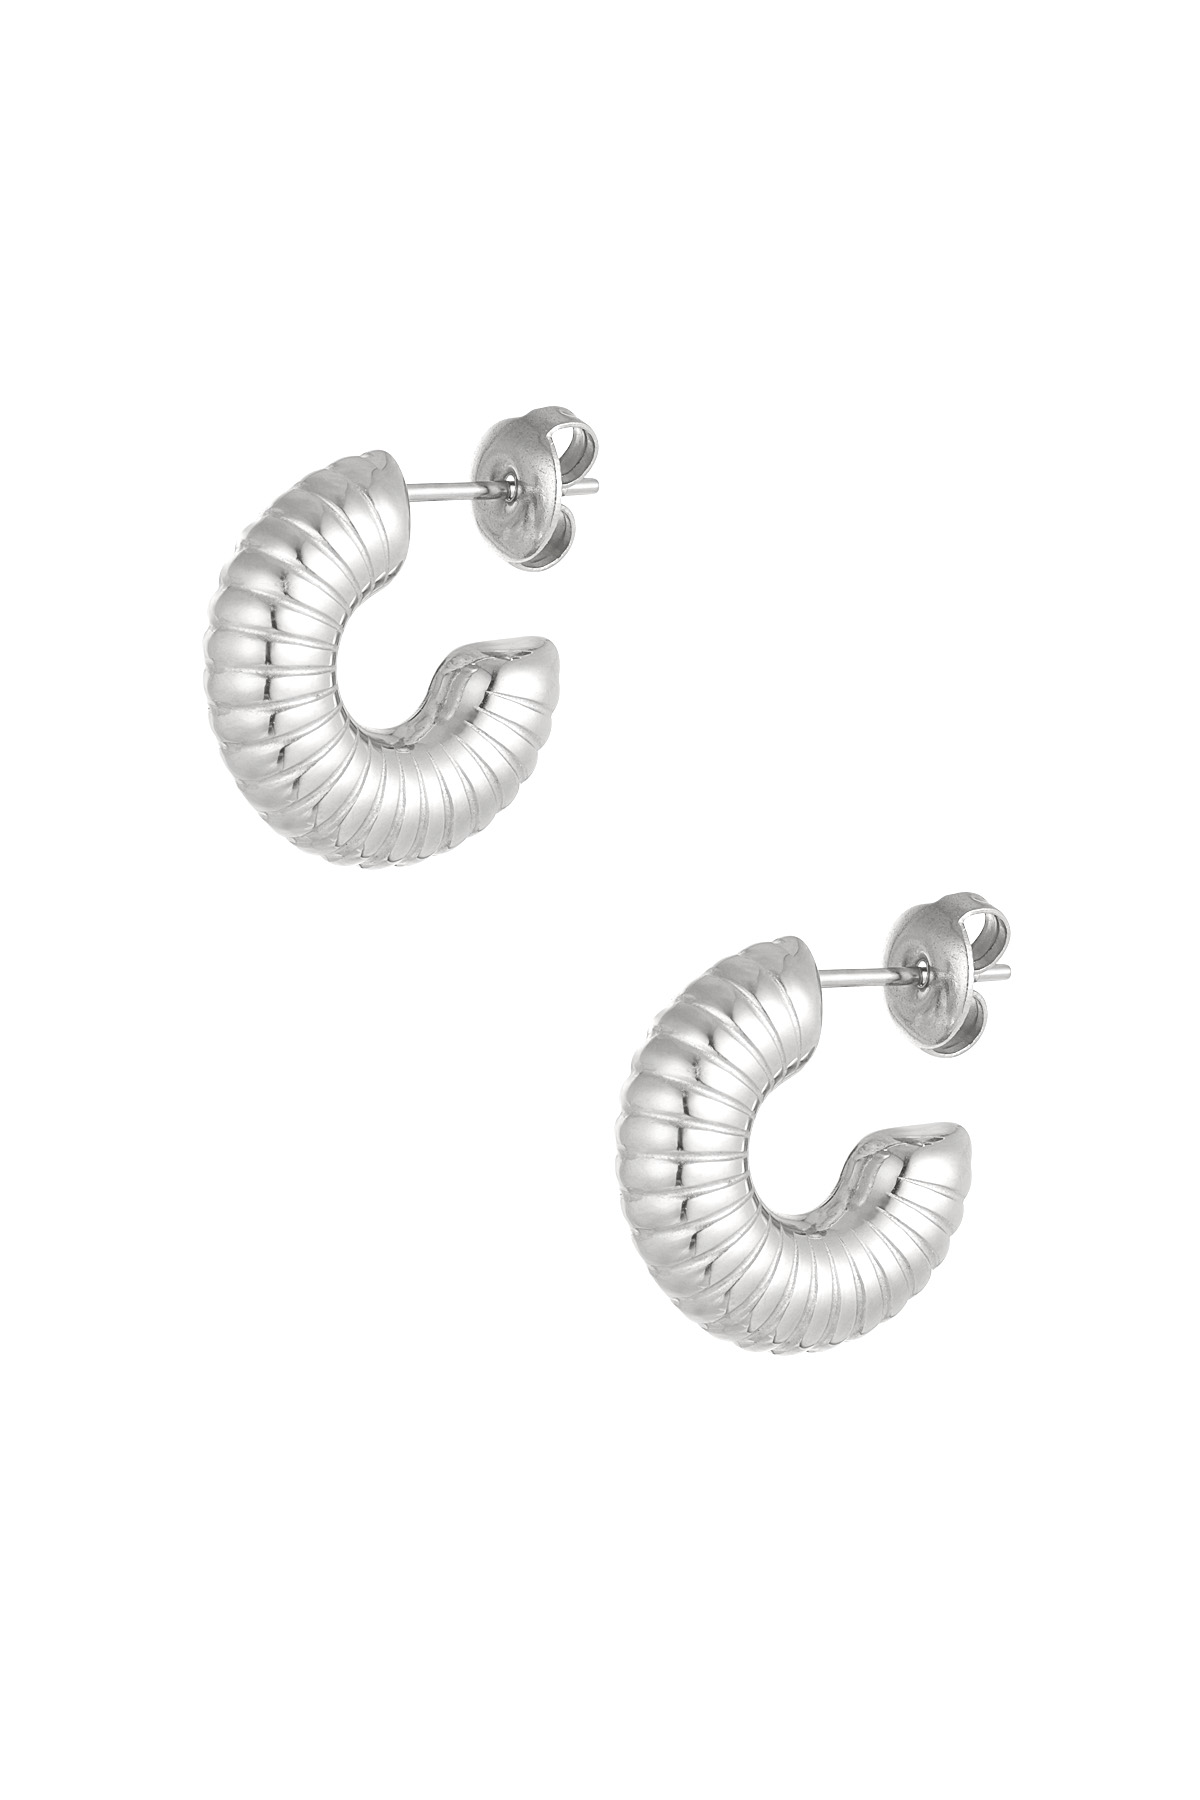 Earrings aesthetic half moon small - silver h5 